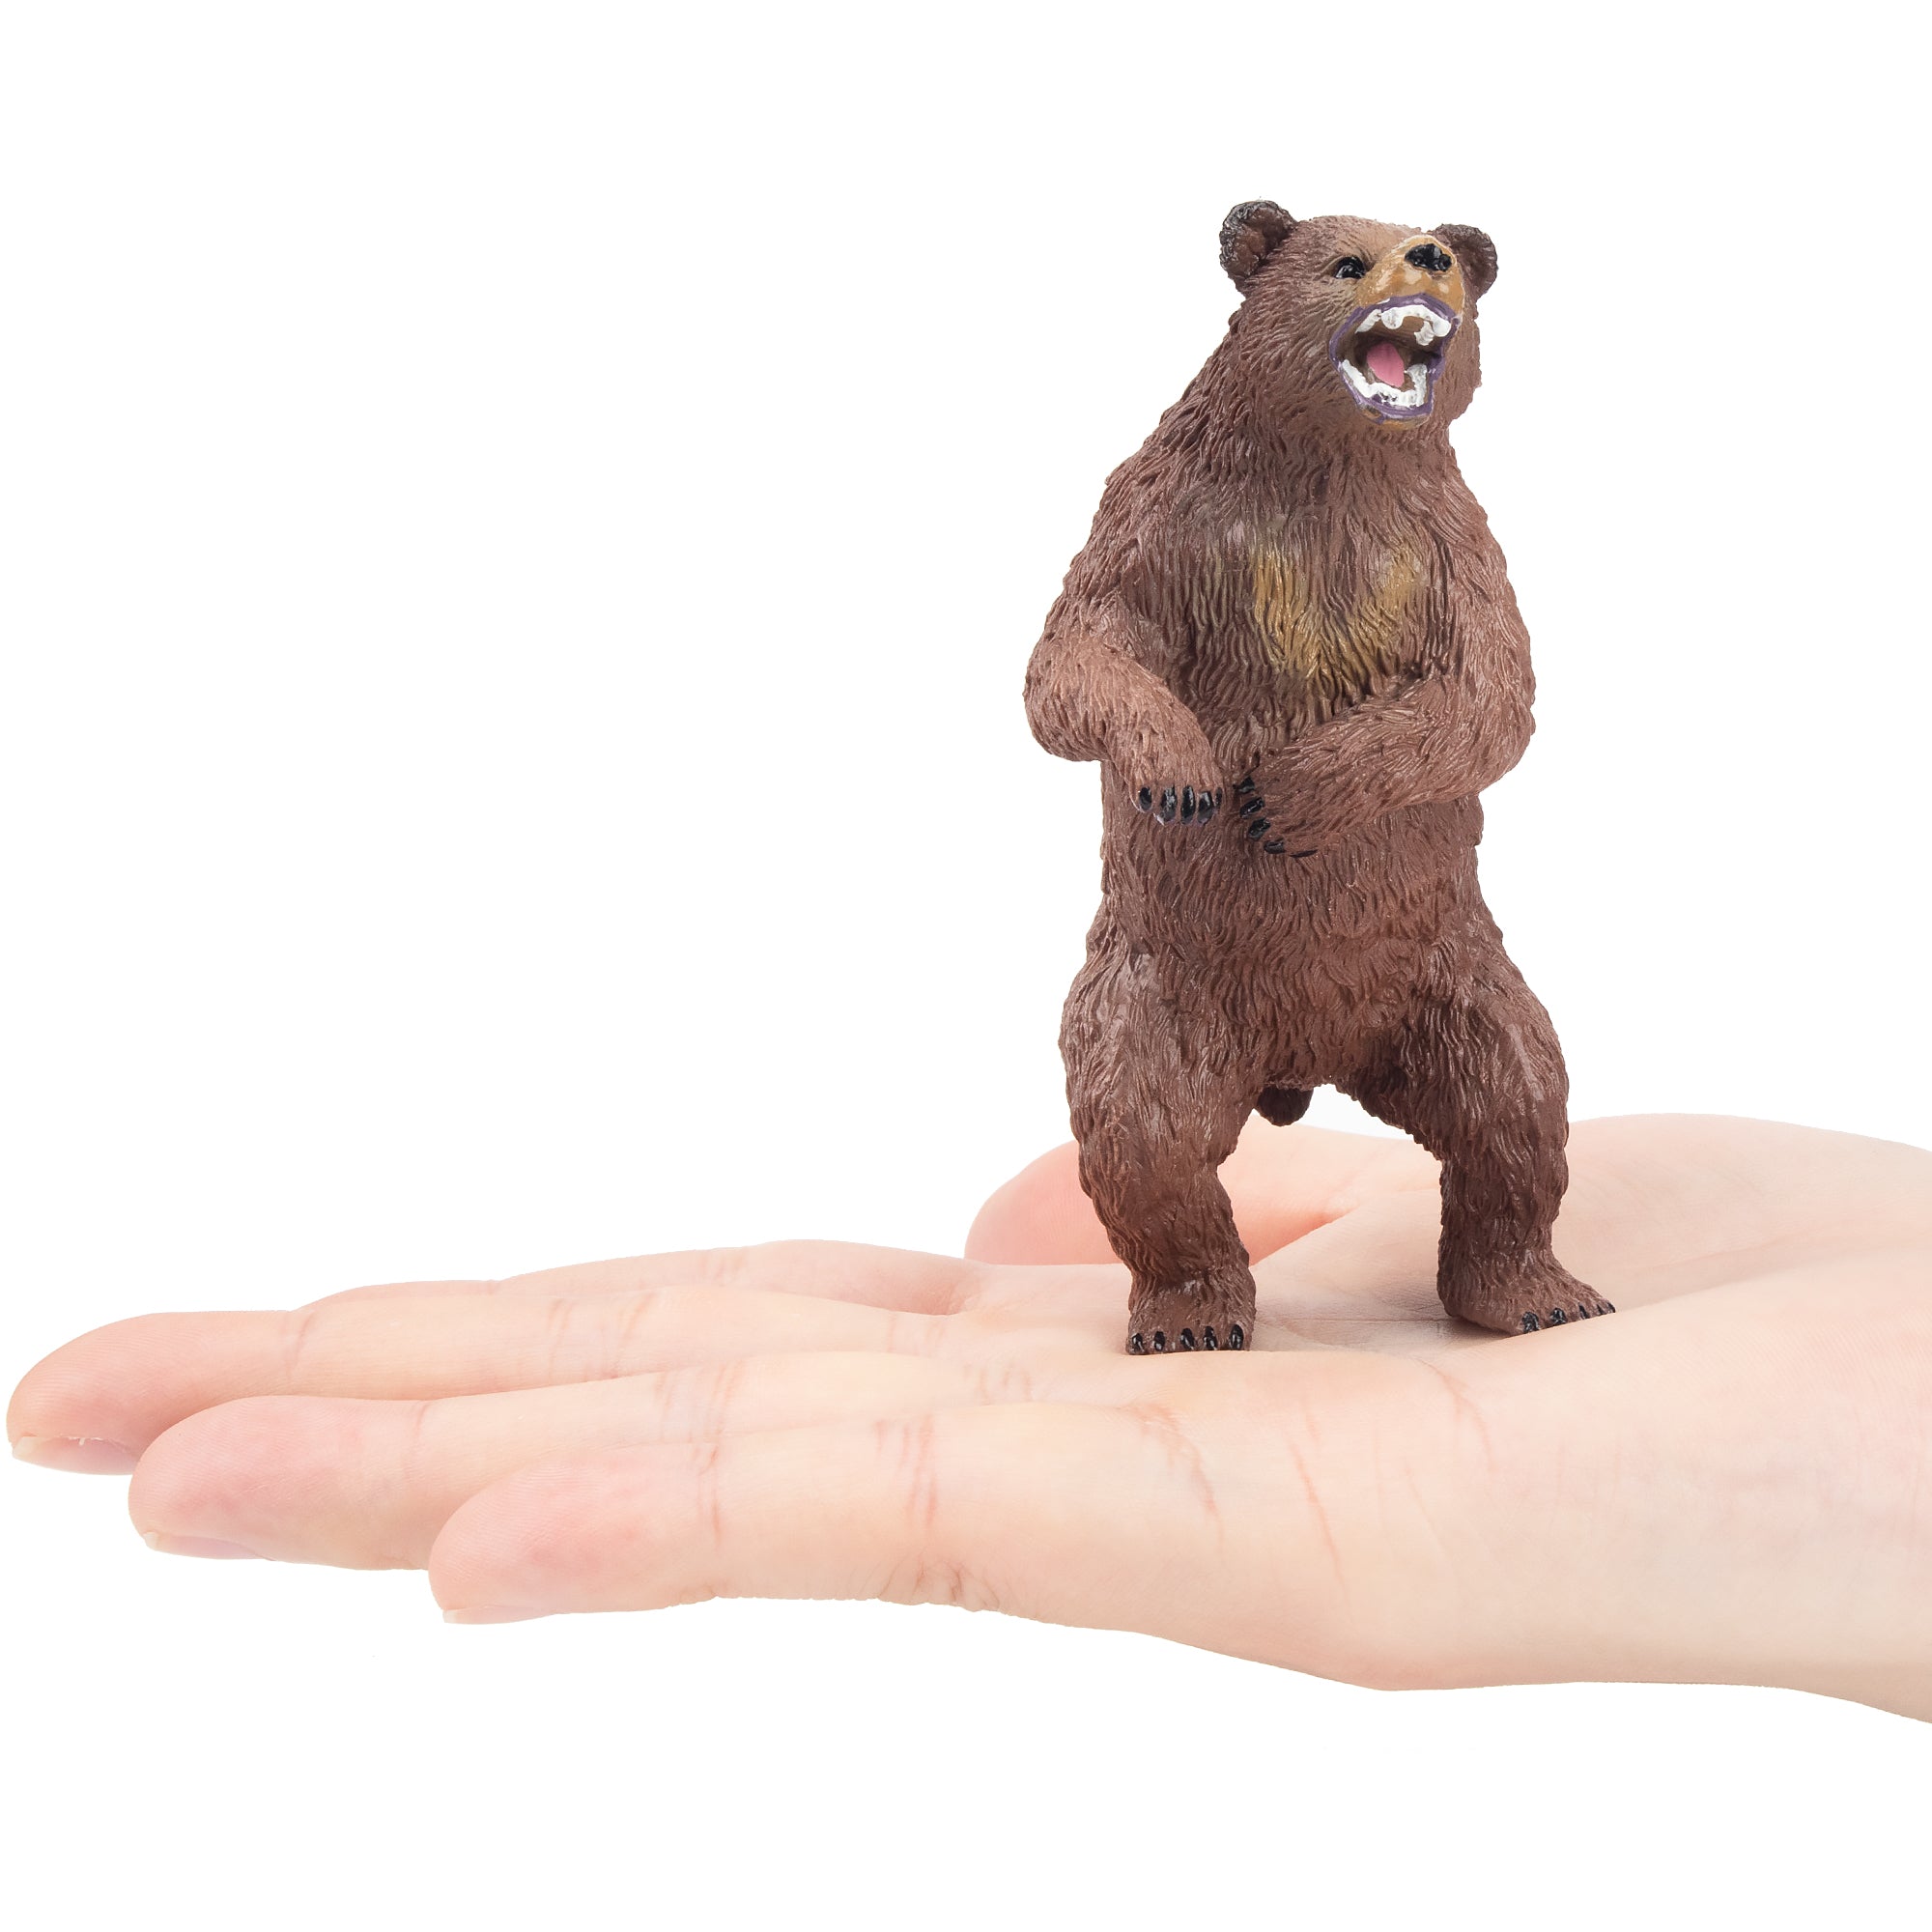 Toymany Brown Bear Figurine Toy-on hand